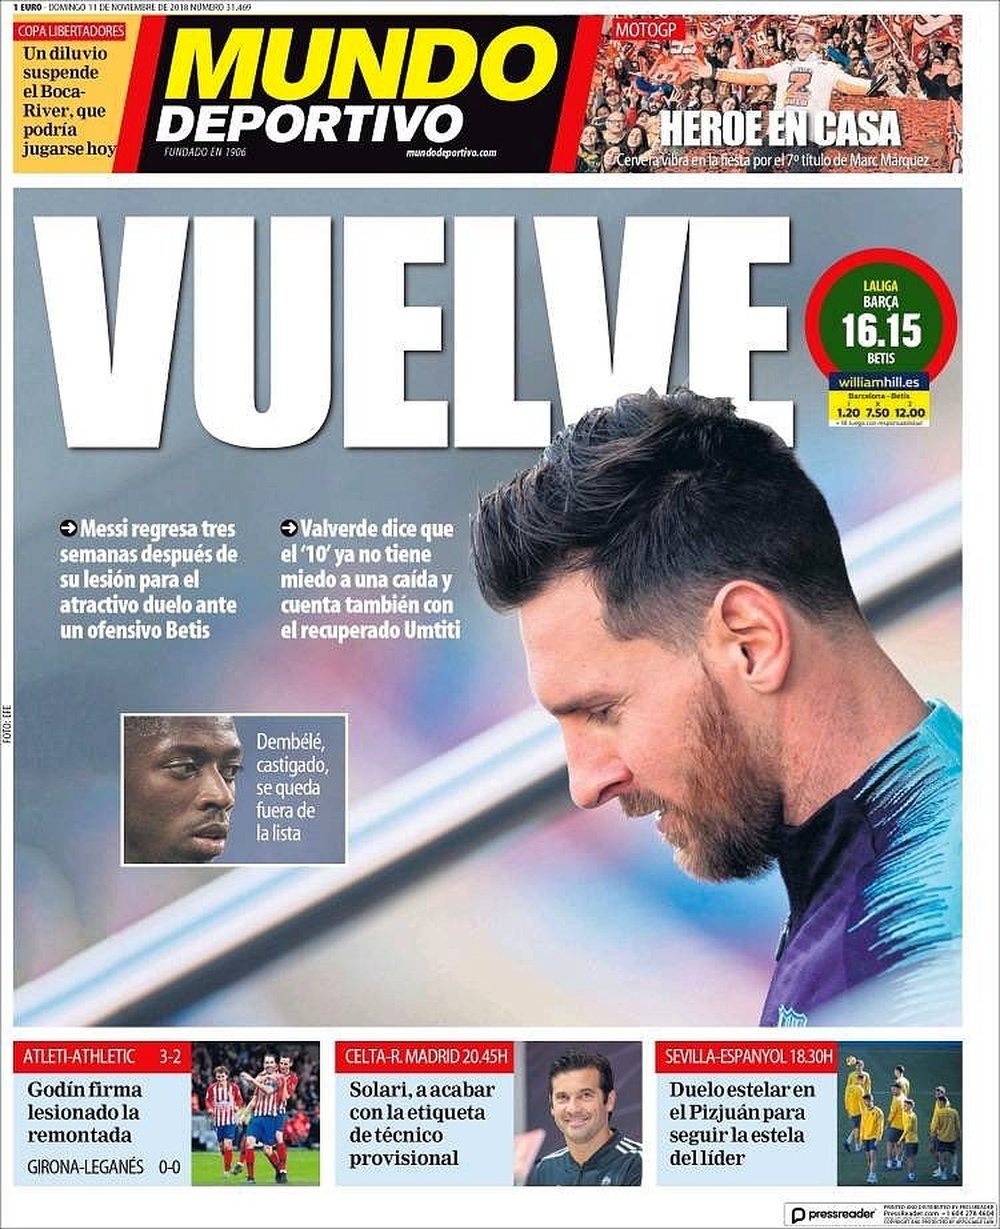 Capa do jornal 'Mundo Deportivo' de 11-11-18. MundoDeportivo